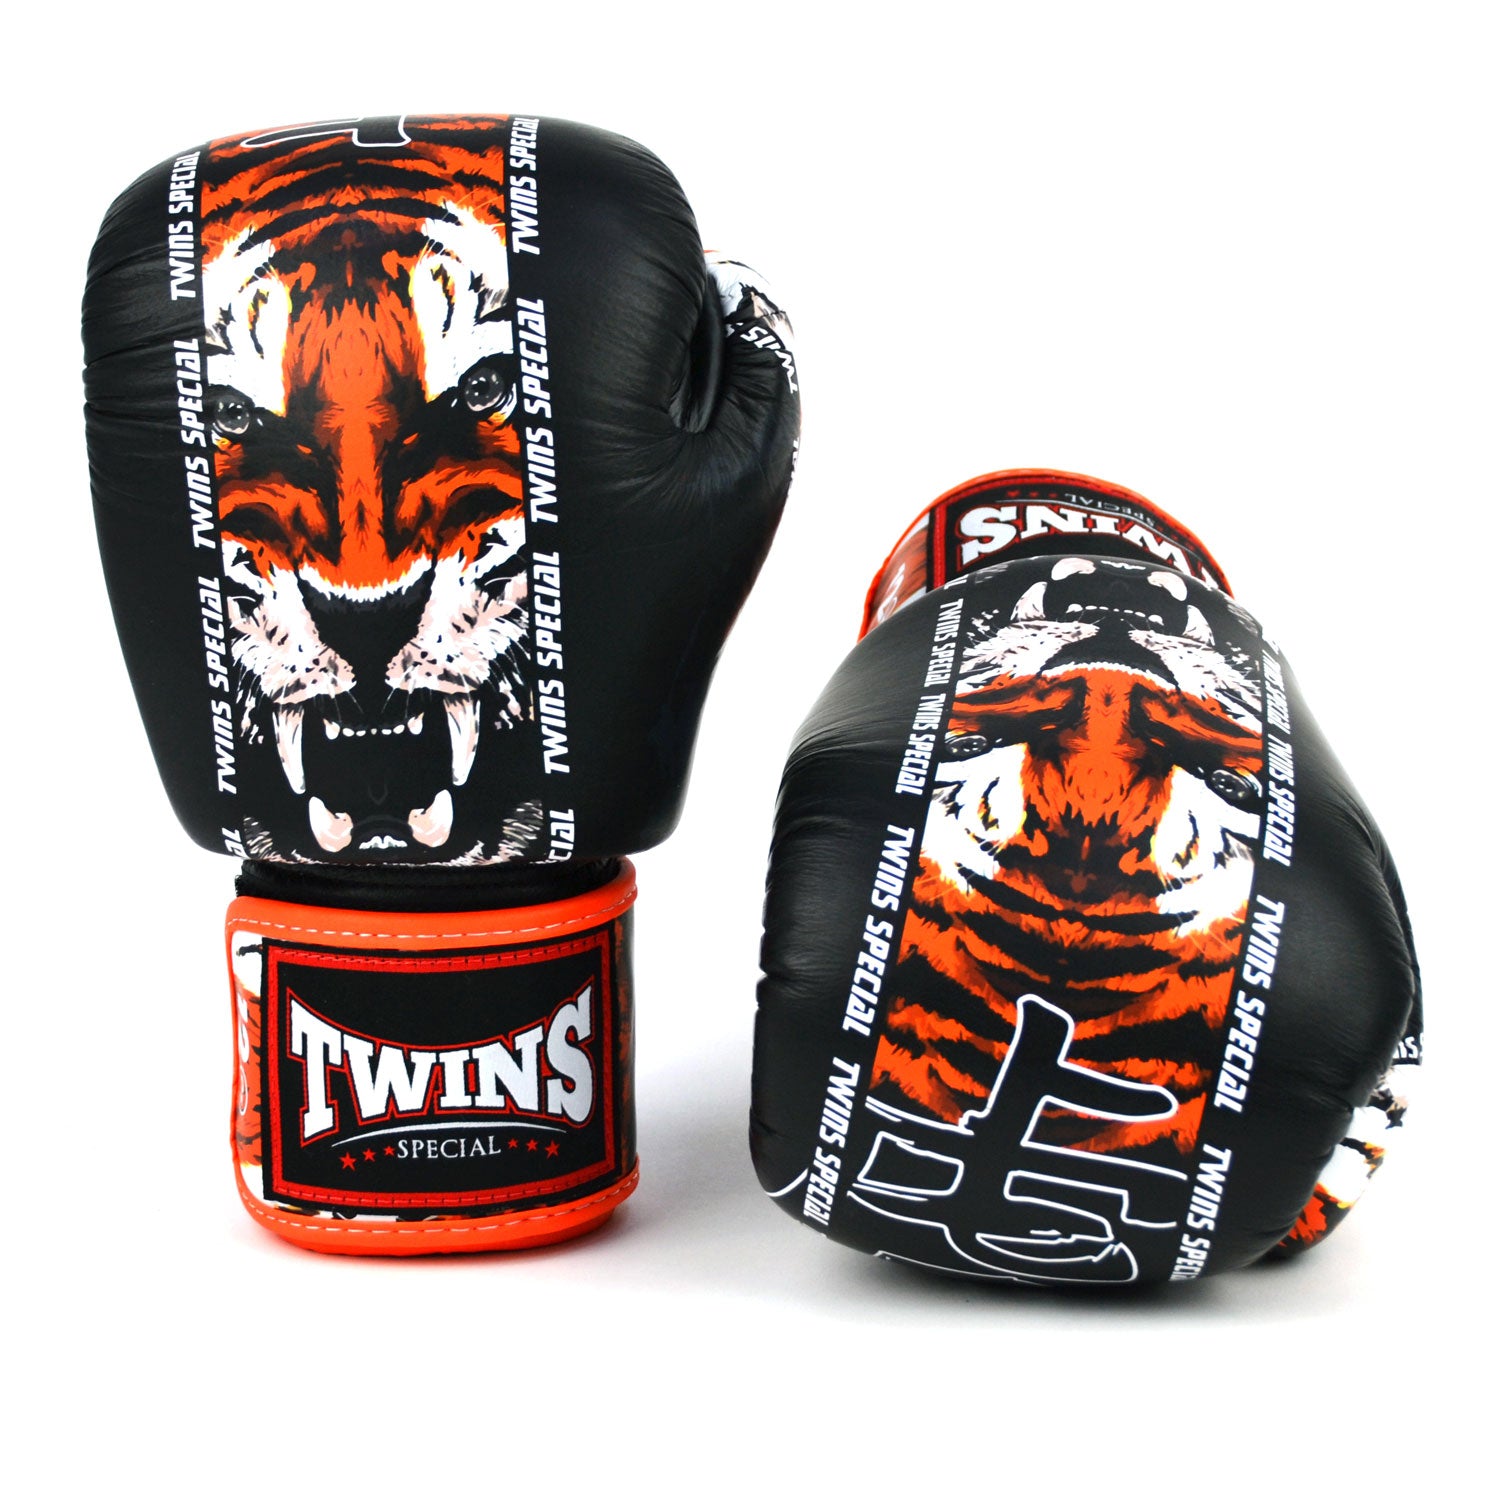 Image of FBGVL3-60 Twins Payak Boxing Gloves Black